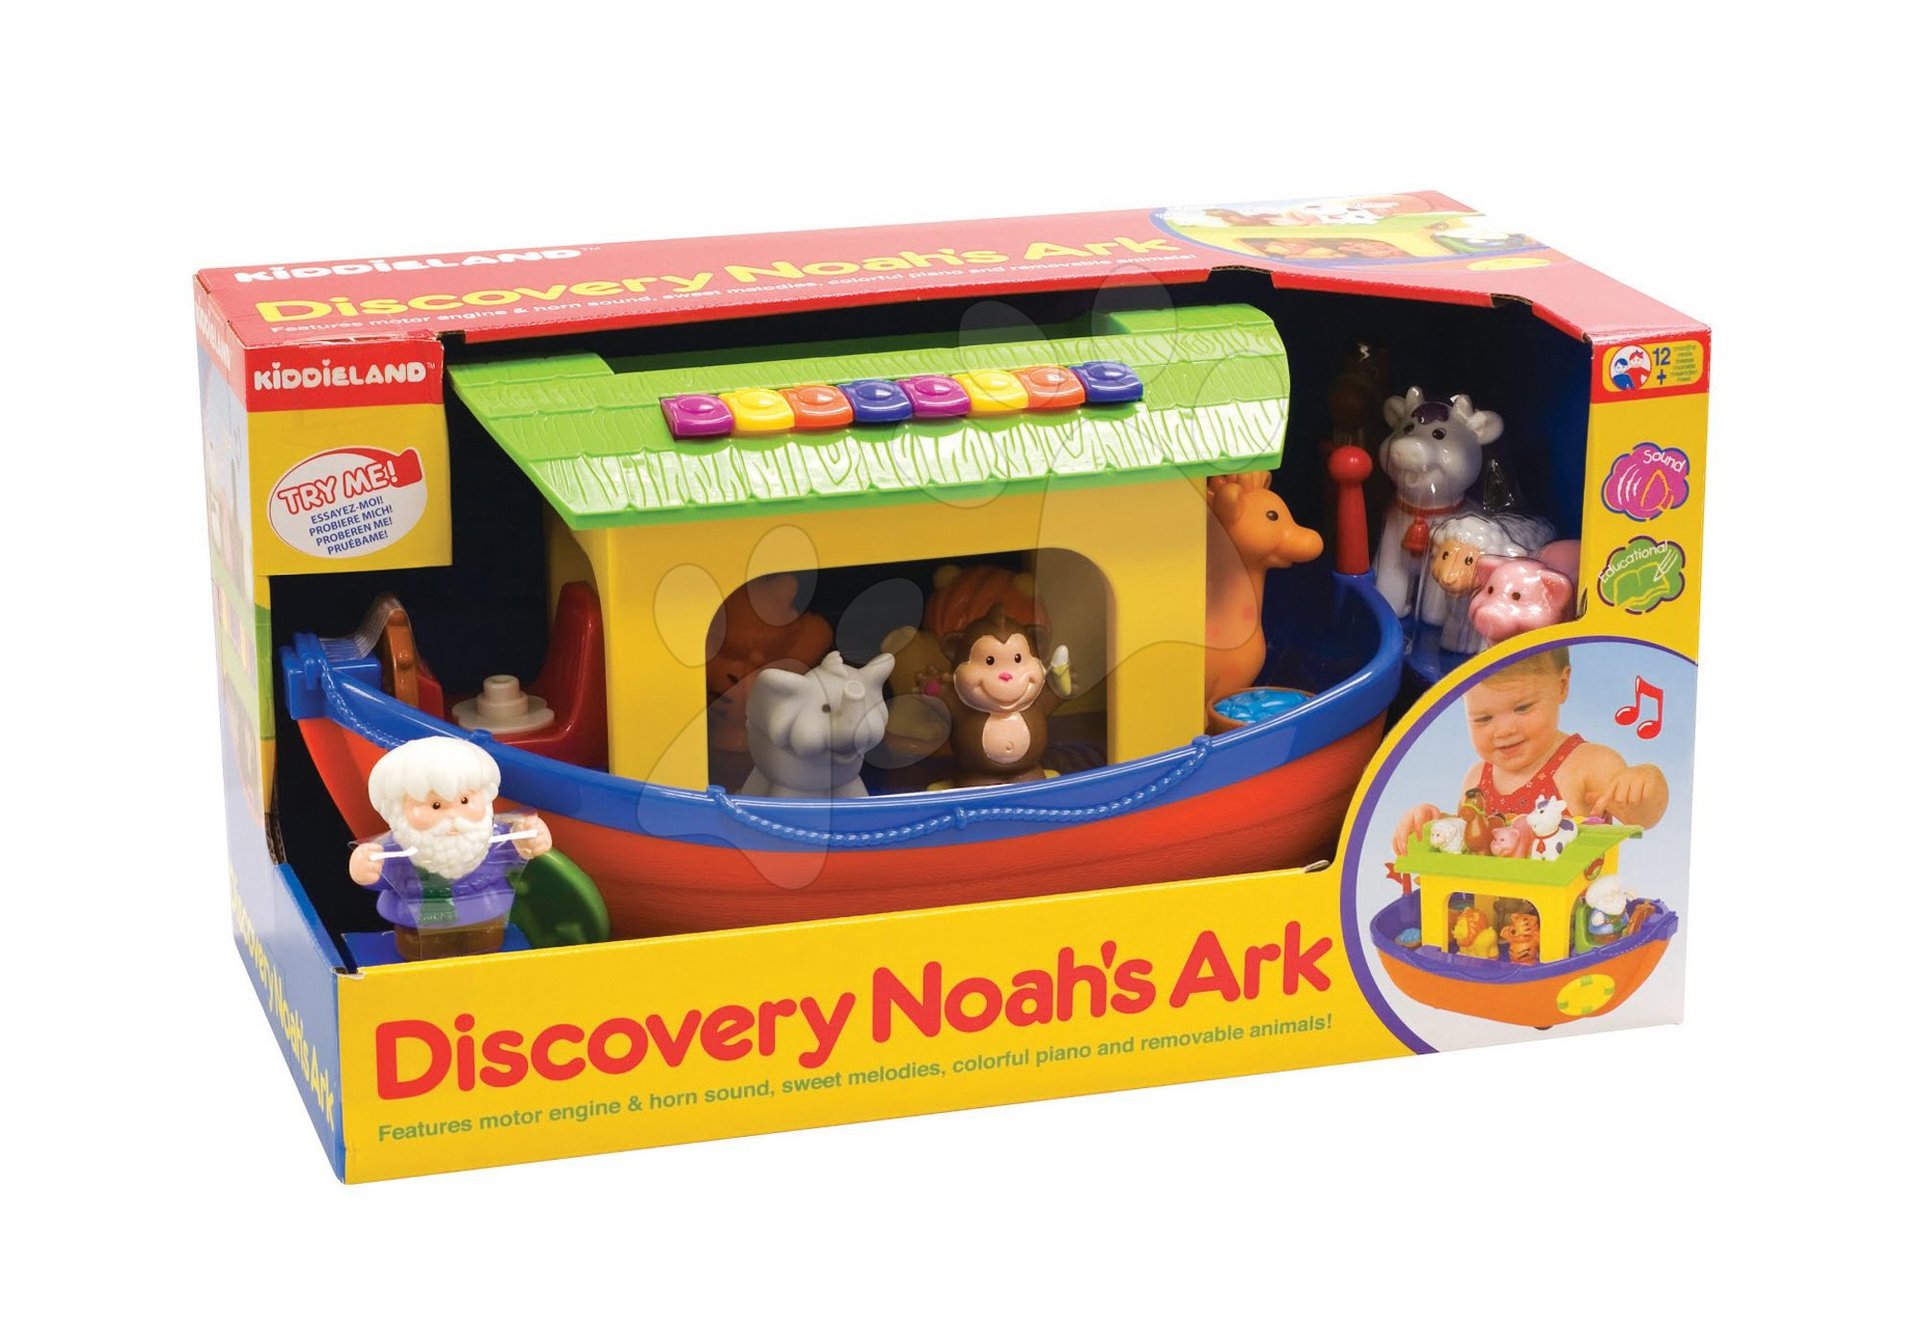 Initially Essentially trap Arca lui Noe pentru copii Kiddieland